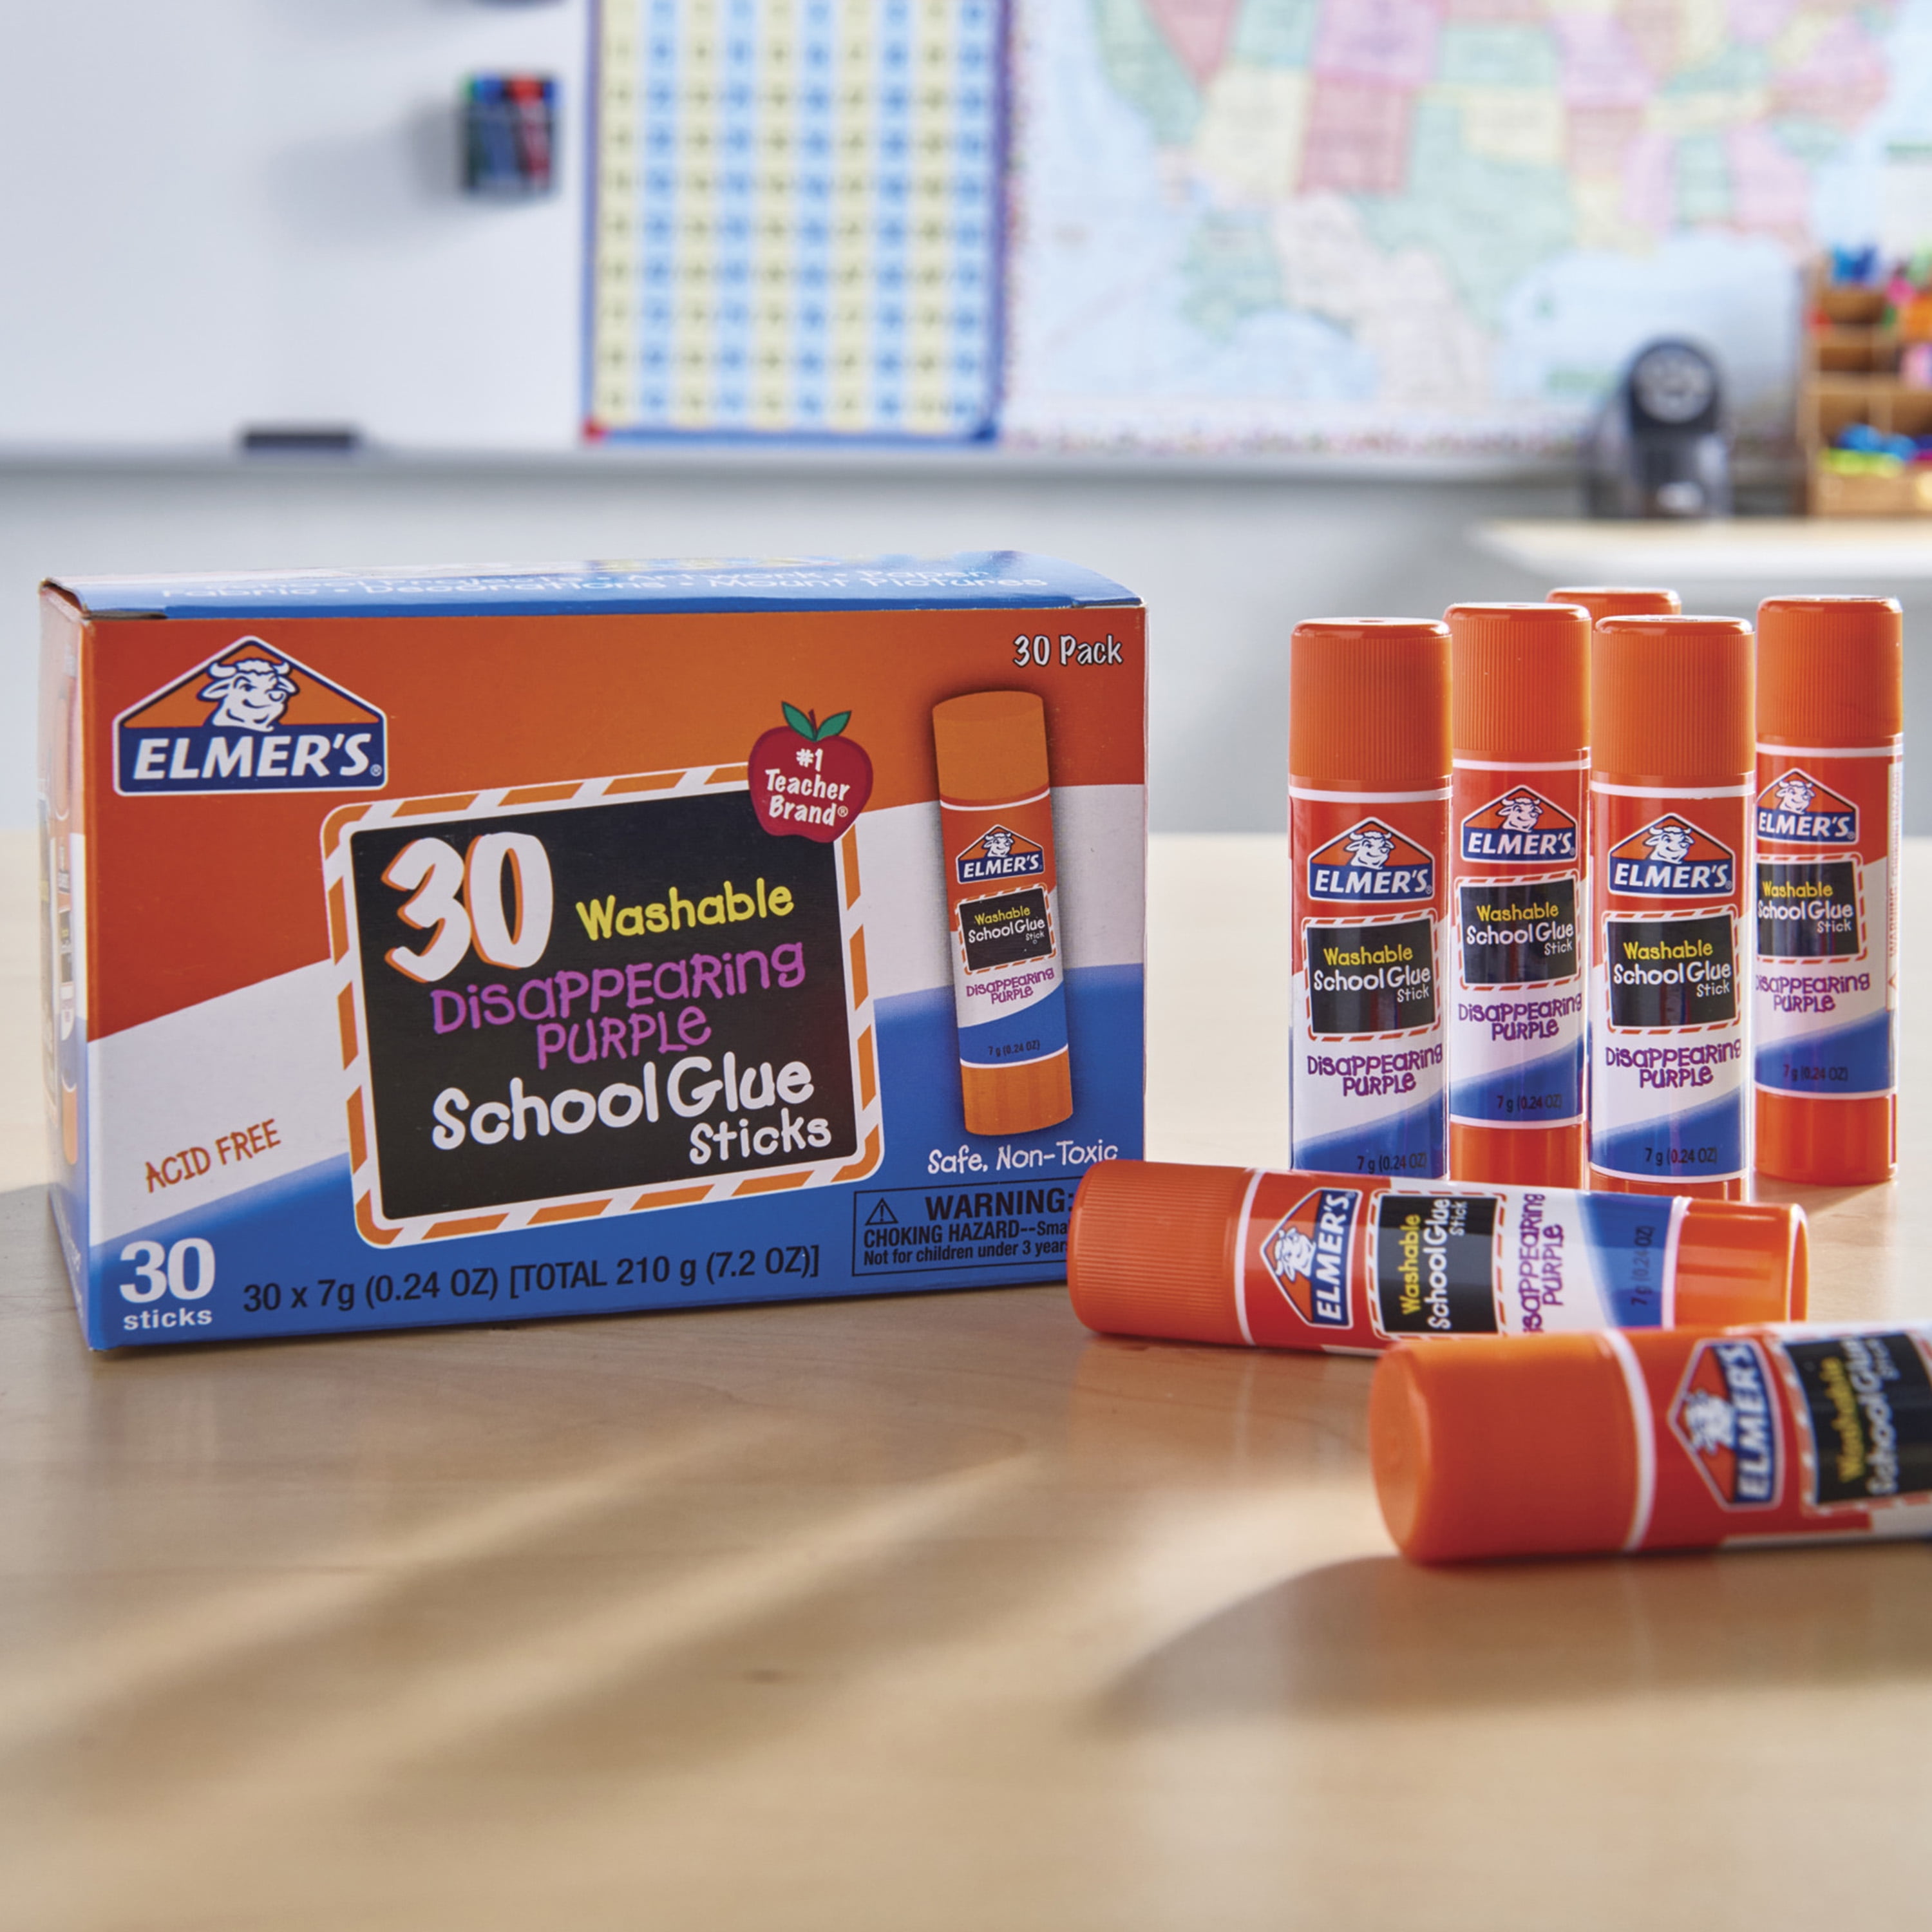 Elmer's 3pk Washable School Glue Sticks - Disappearing Purple : Target